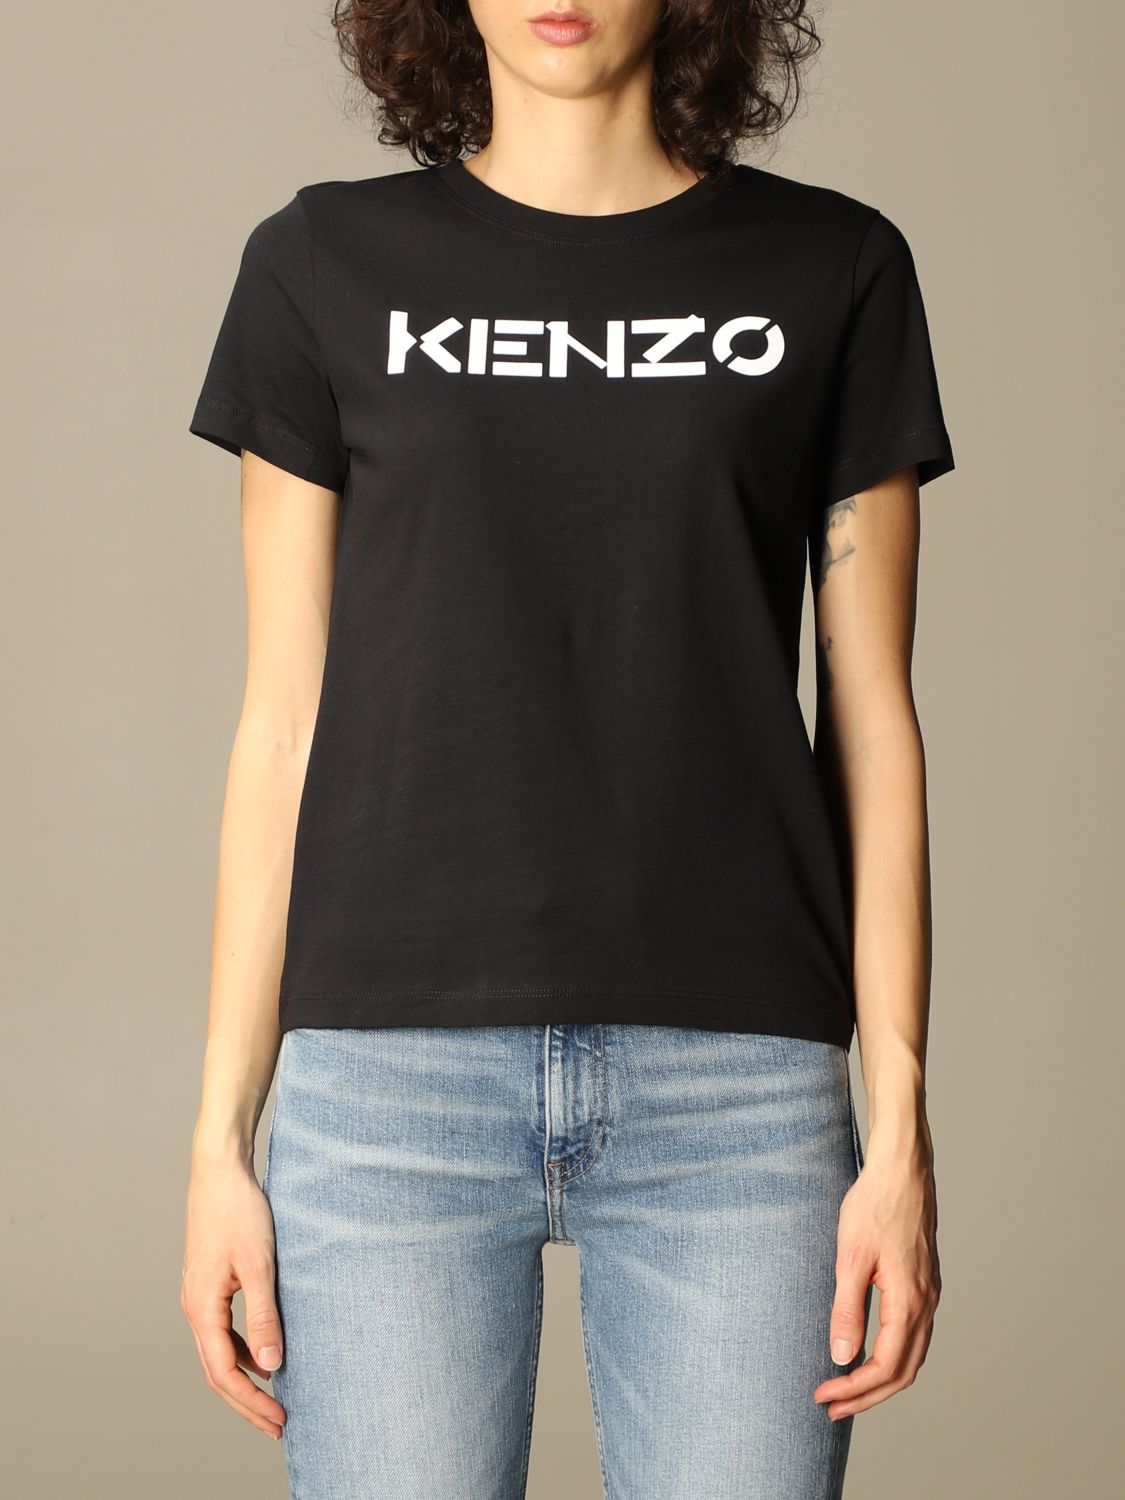 kenzo t shirt noir